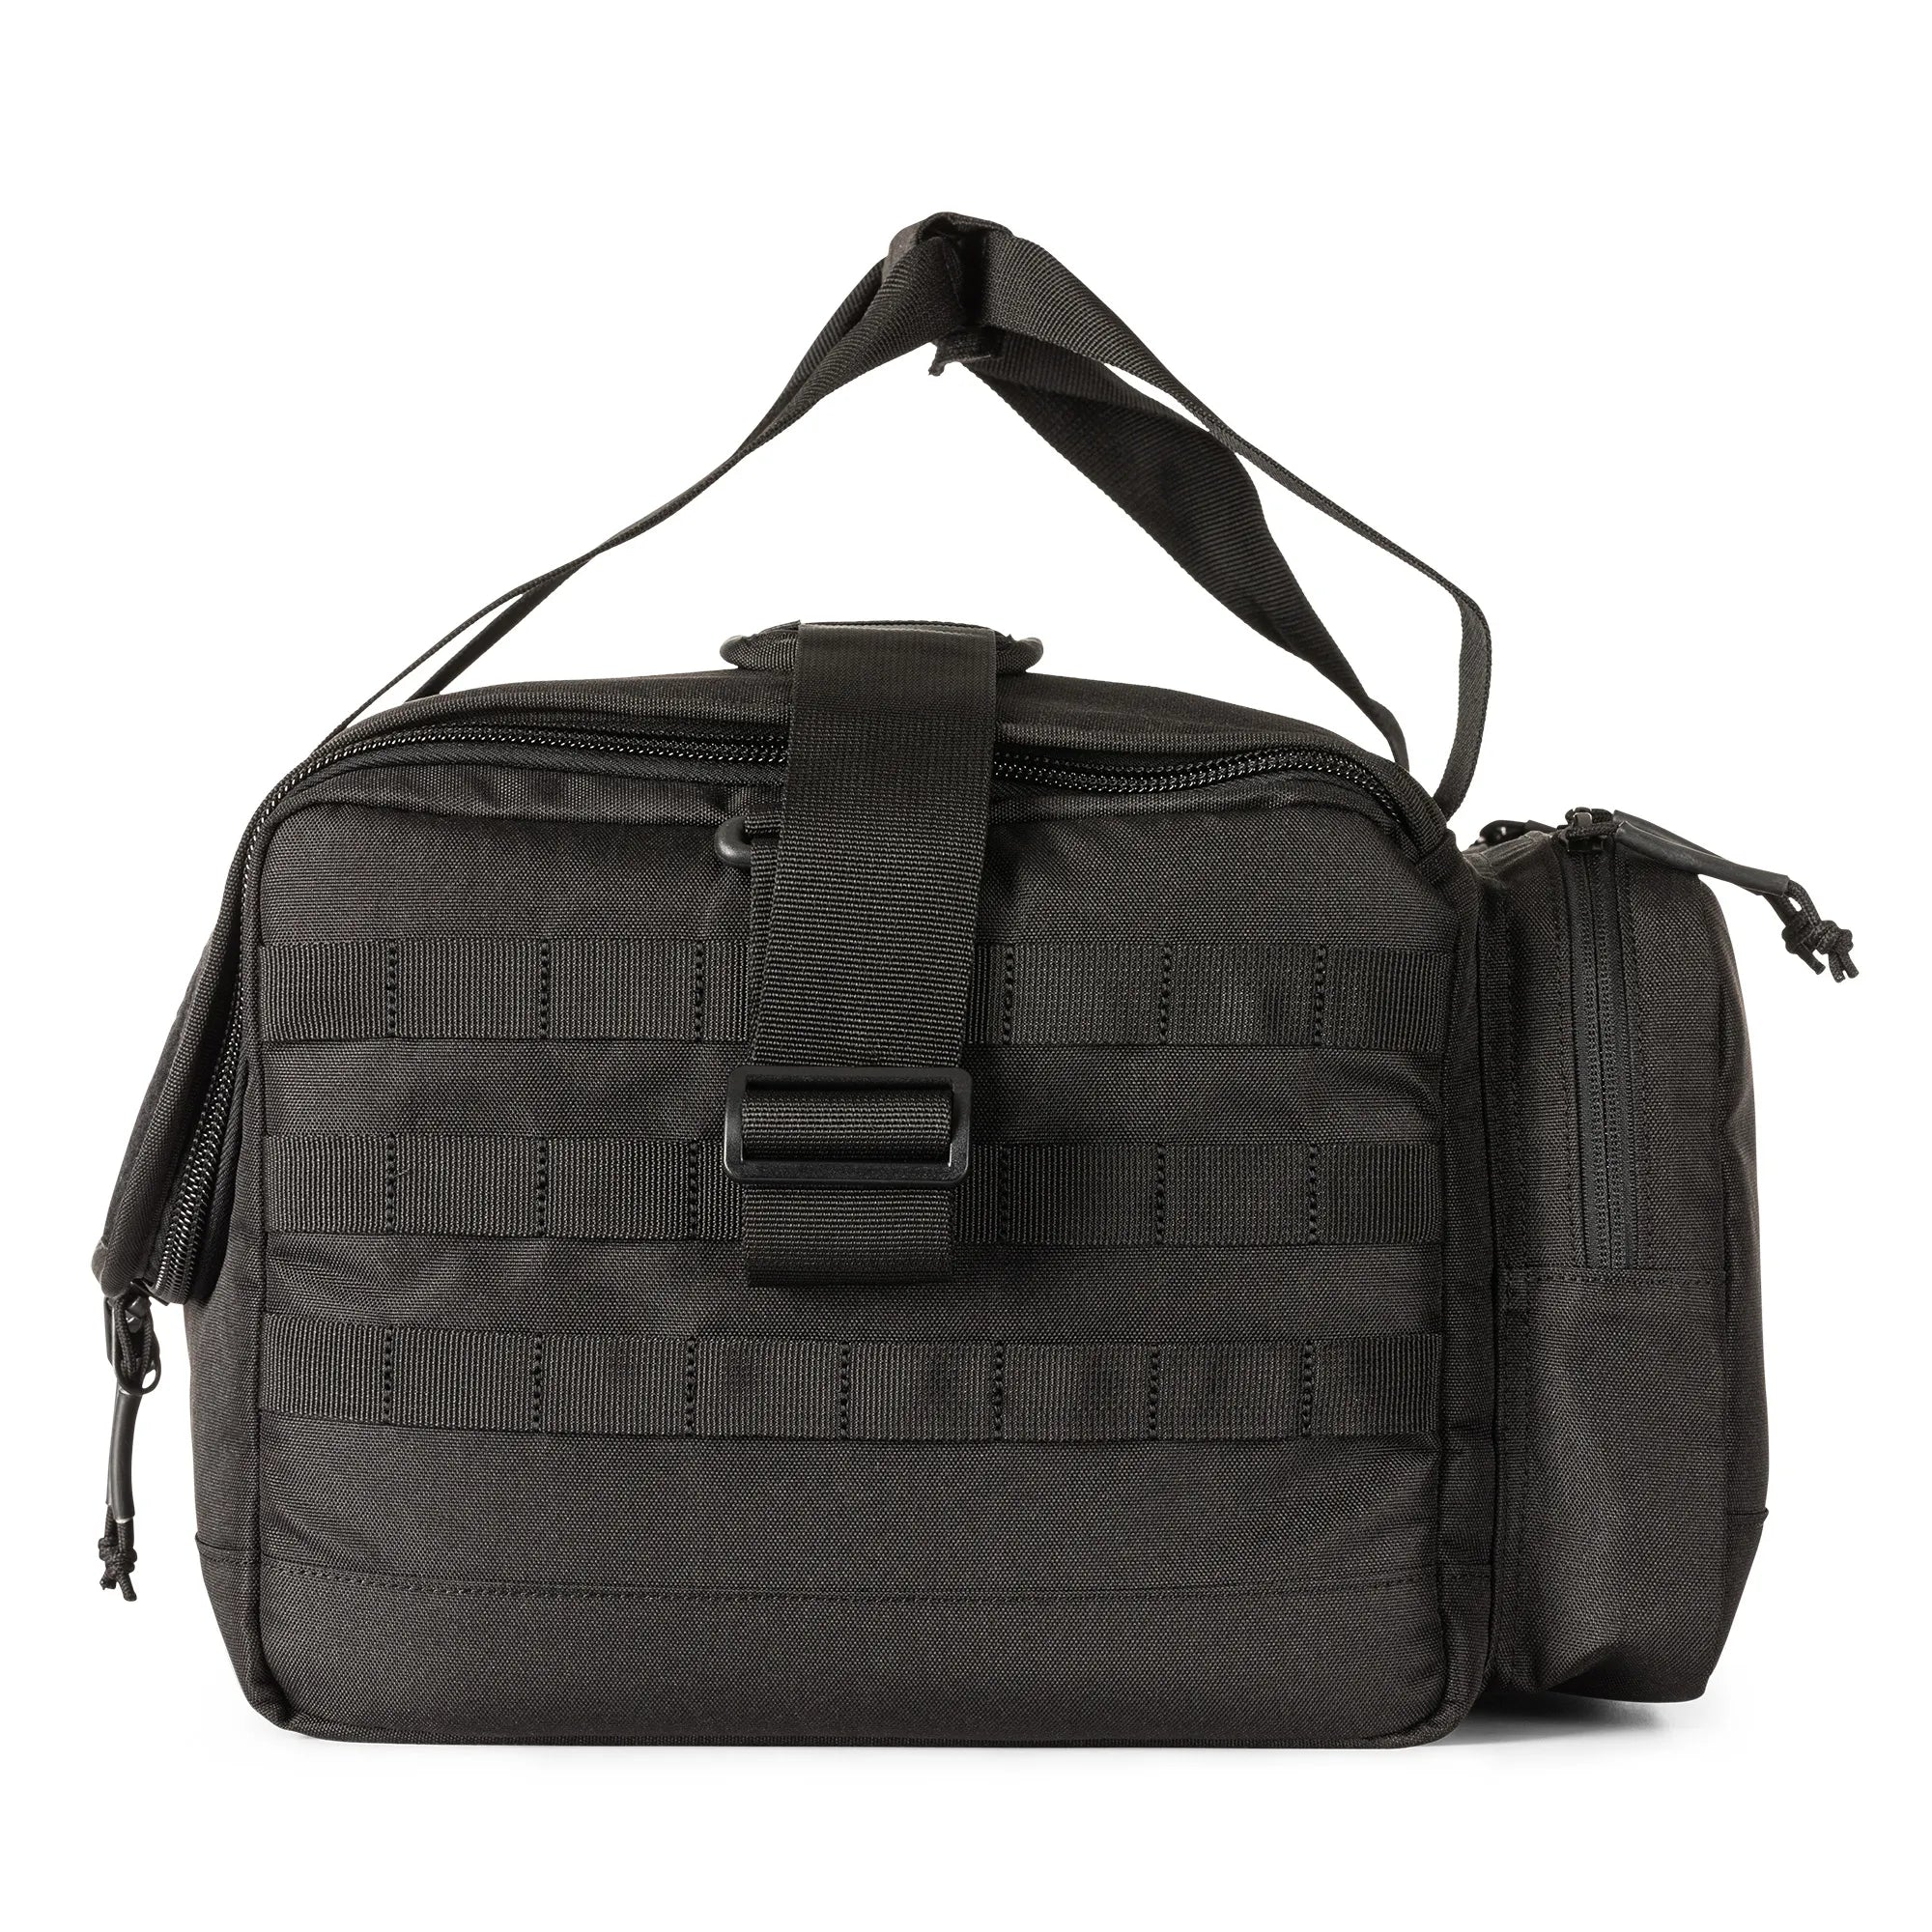 5.11 Tactical - Range Ready Trainer Bag